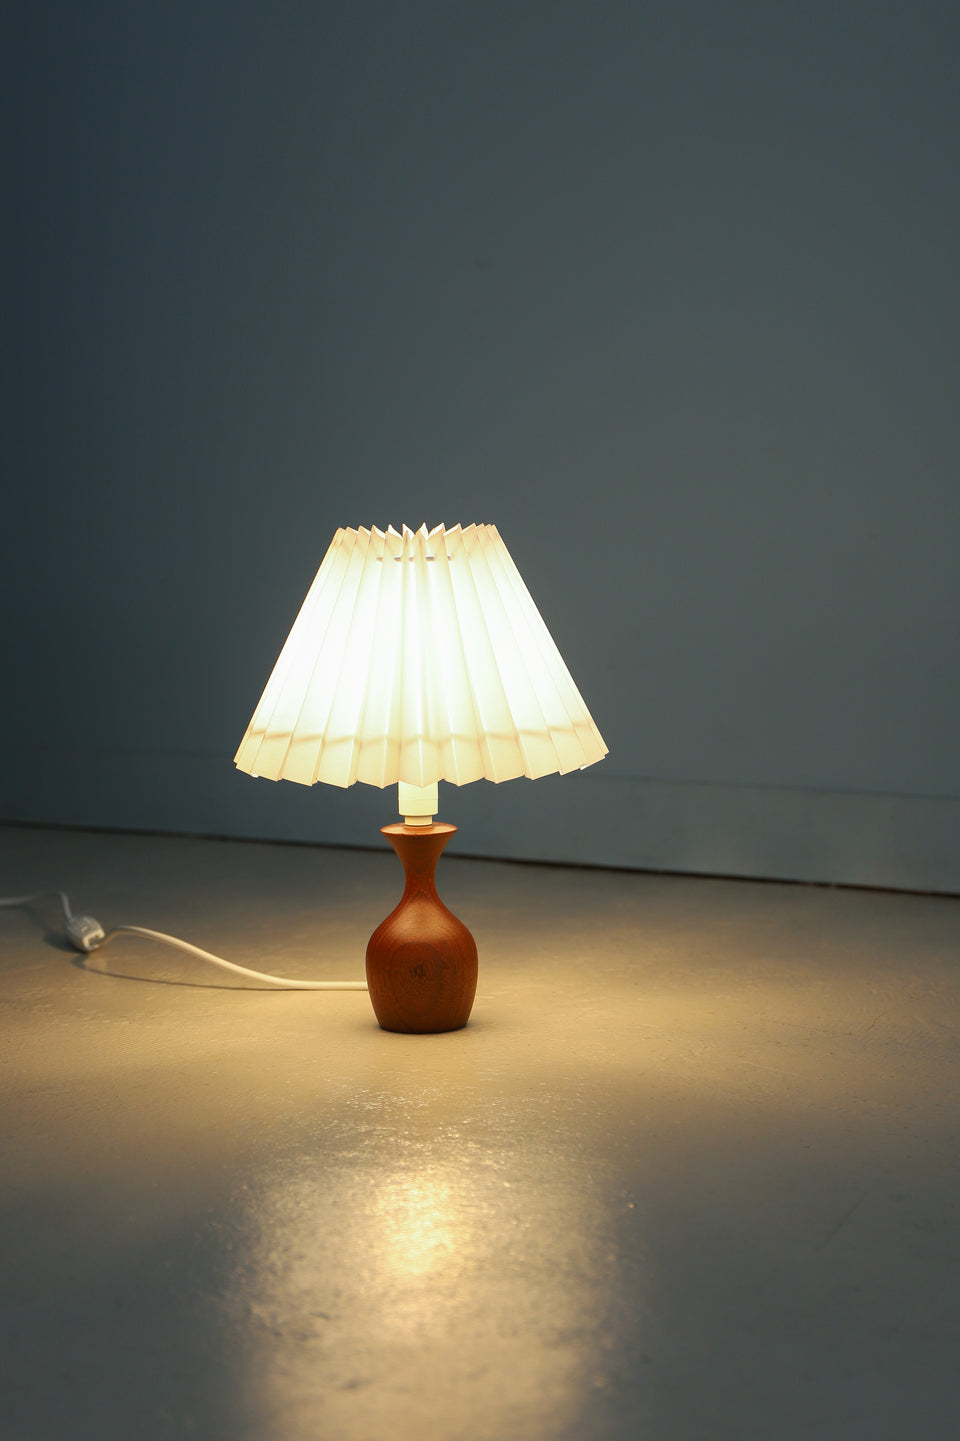 Small Table Lamp Teakwood Danish Vintage/デンマークヴィンテージ テーブルランプ チーク材 間接照明 北欧インテリア